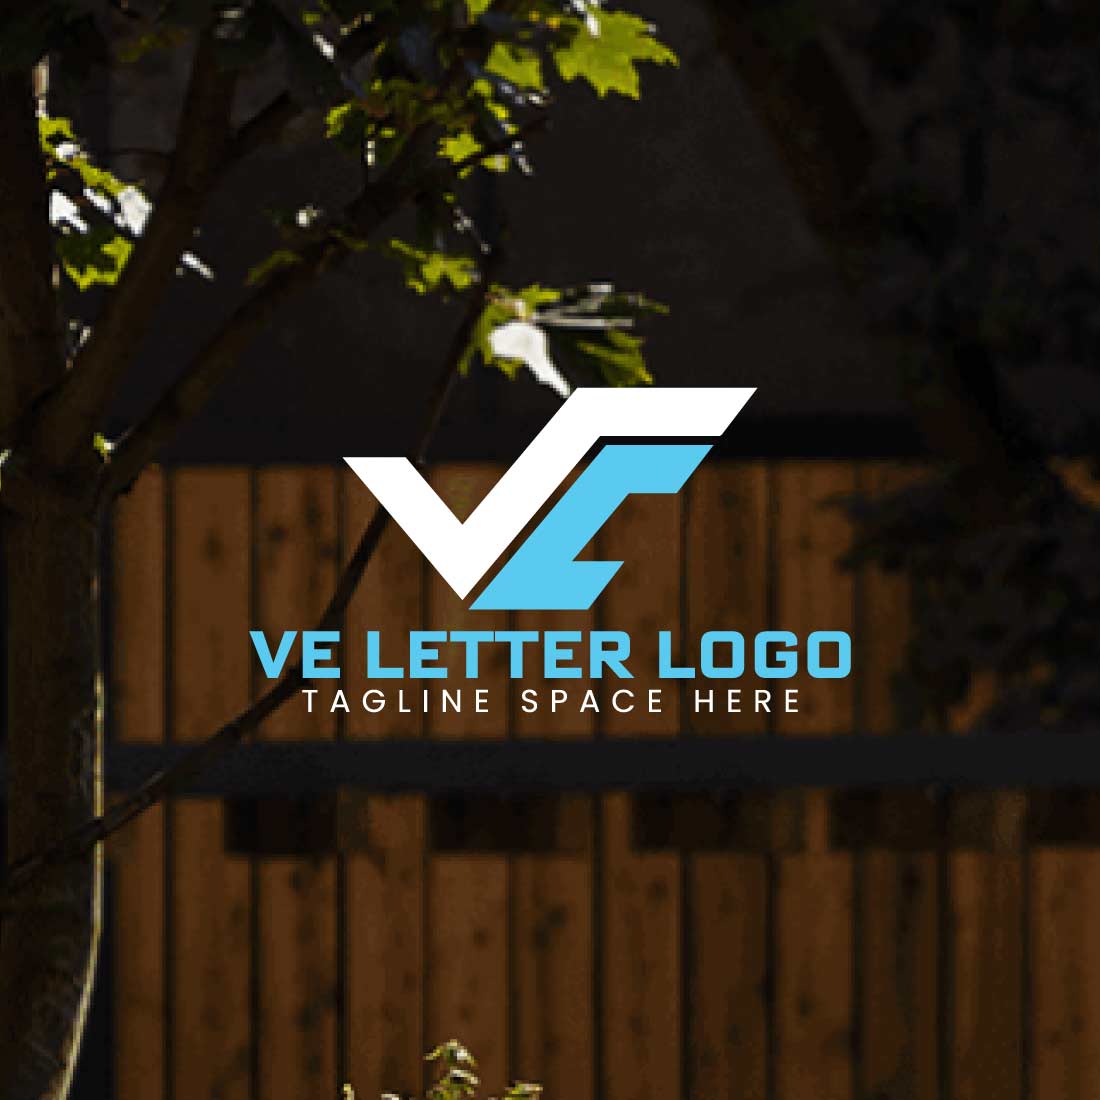 VE Letter Brand Identity Logo Template cover image.